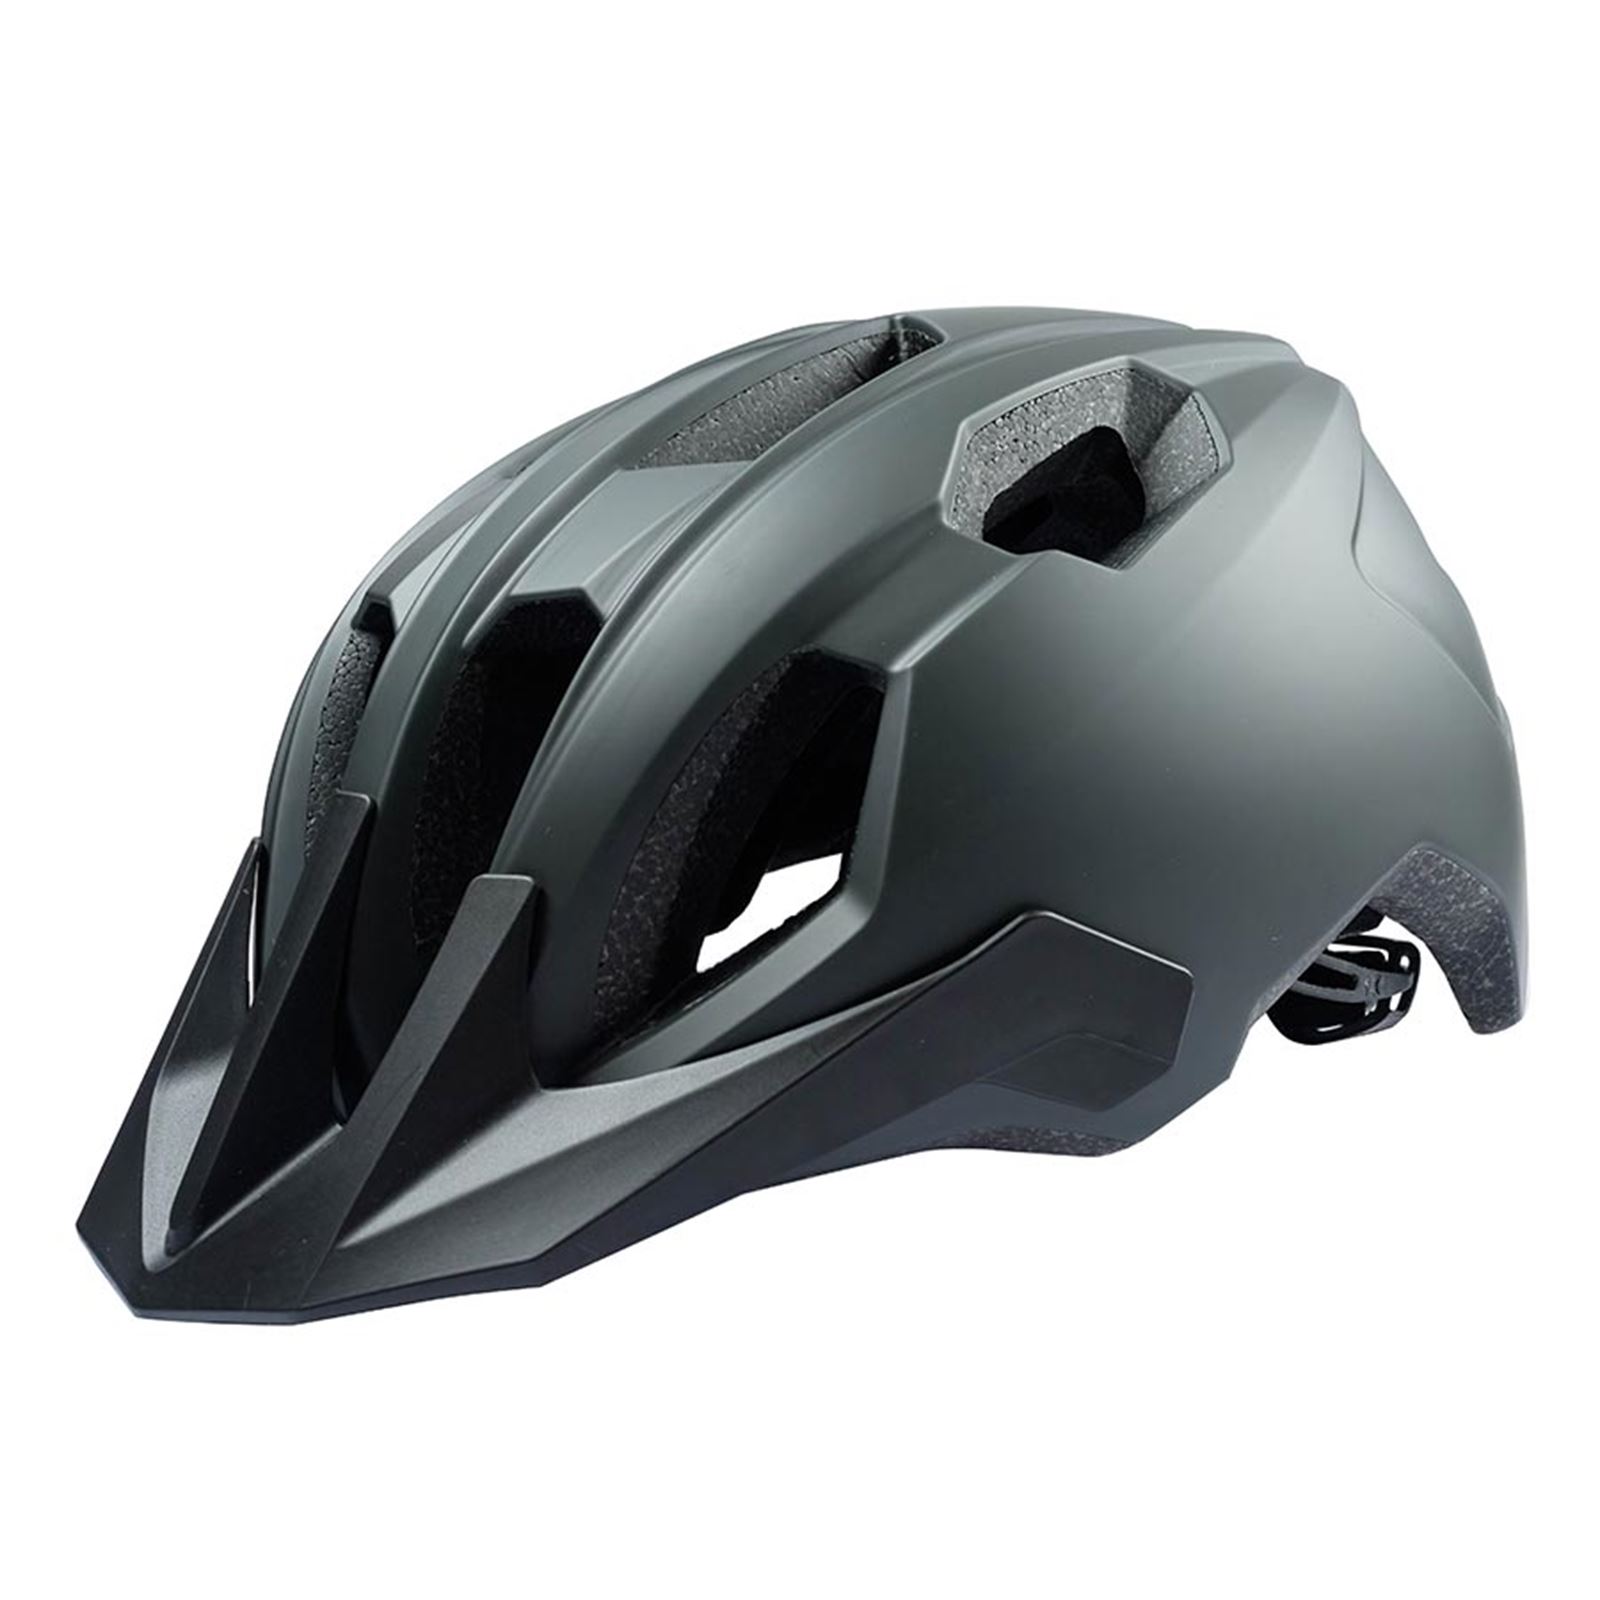 EVO All-Mountain Helmet - Raven Black - Small/Medium 54 - 58cm